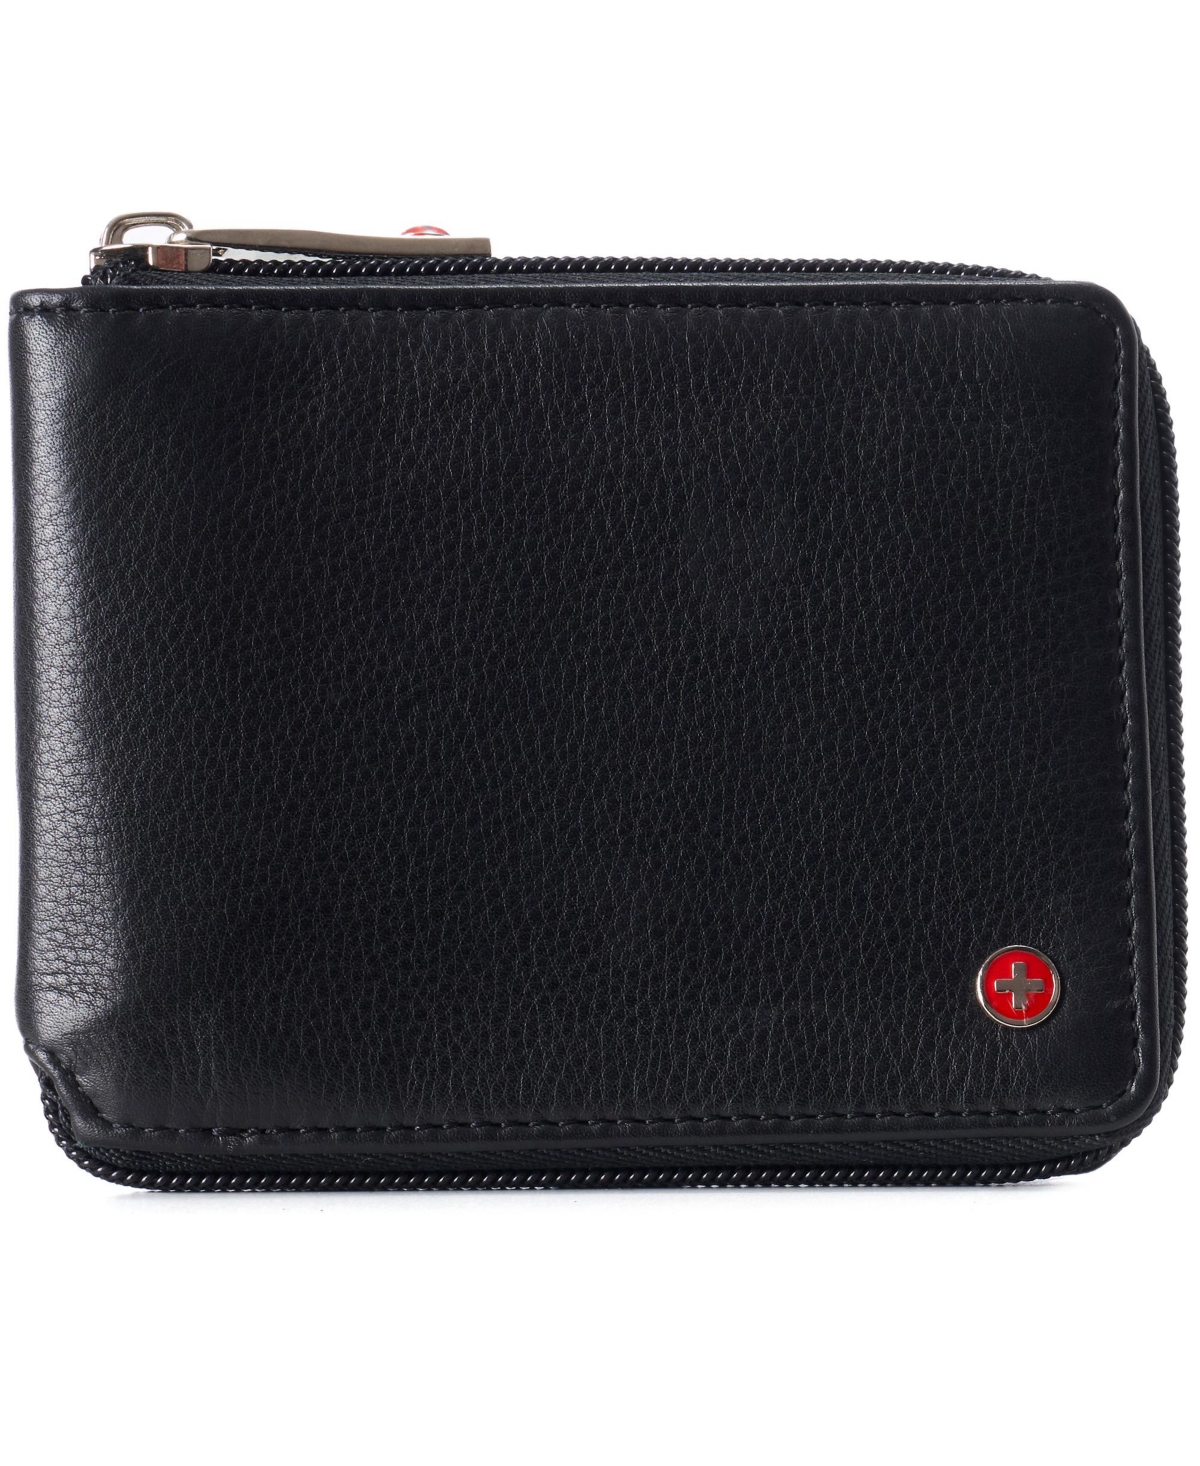 Zipper Bifold Wallet for Men Women Rfid Protected Genuine Leather - Black